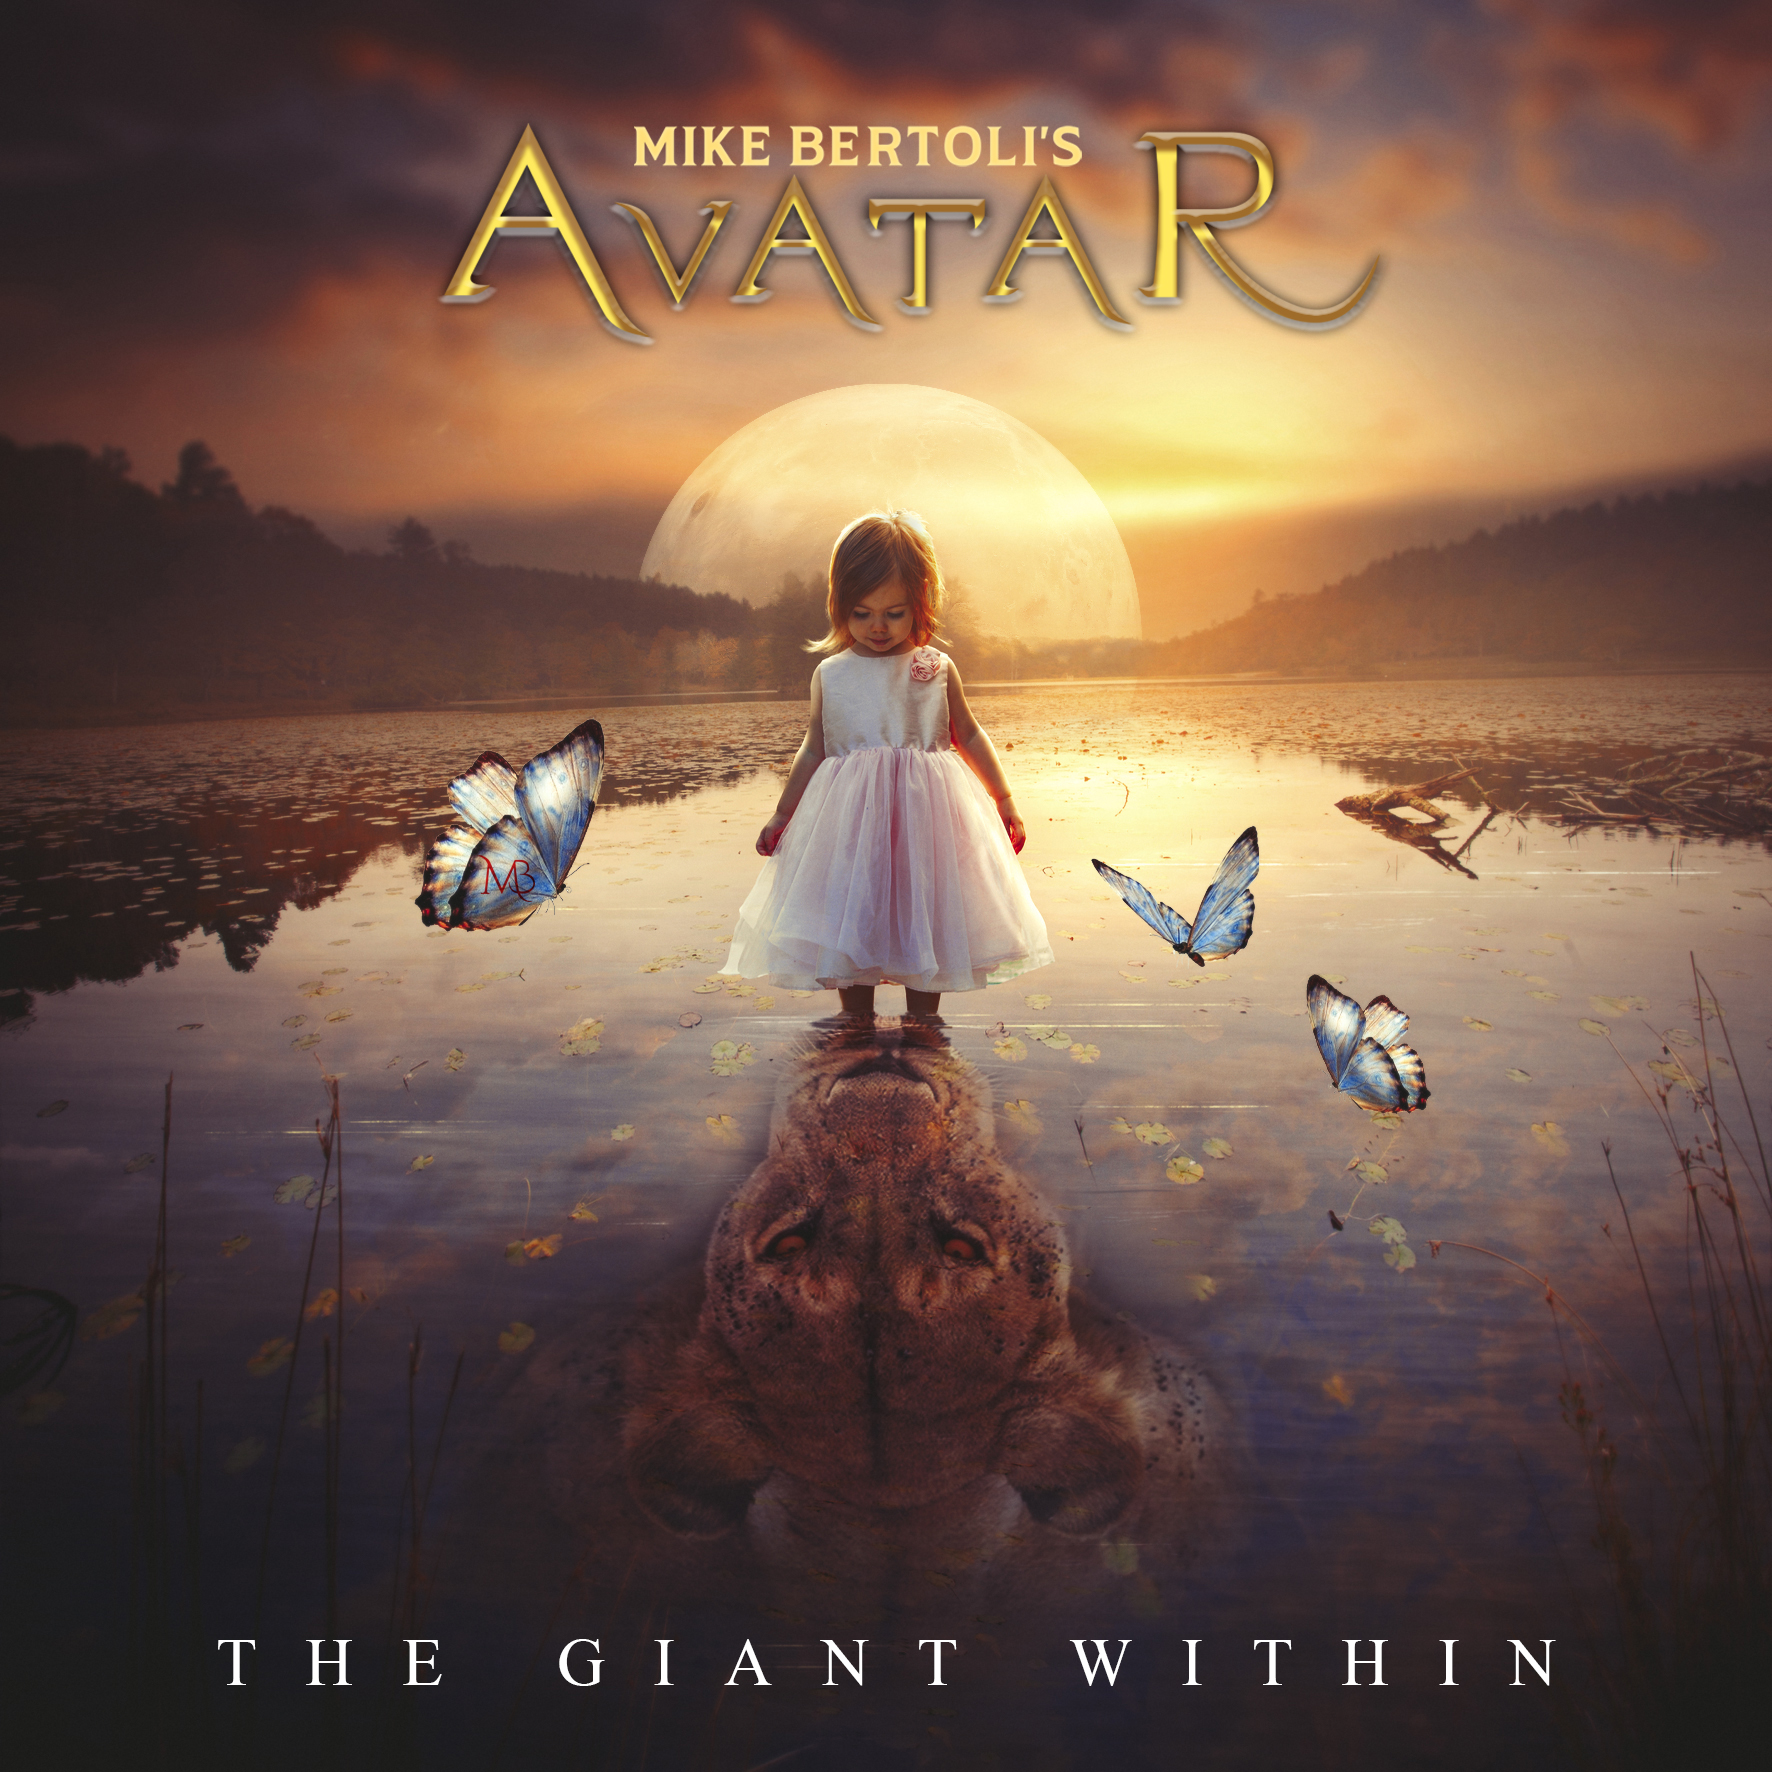 Mike Bertoli's Avatar - “The giant within” CD